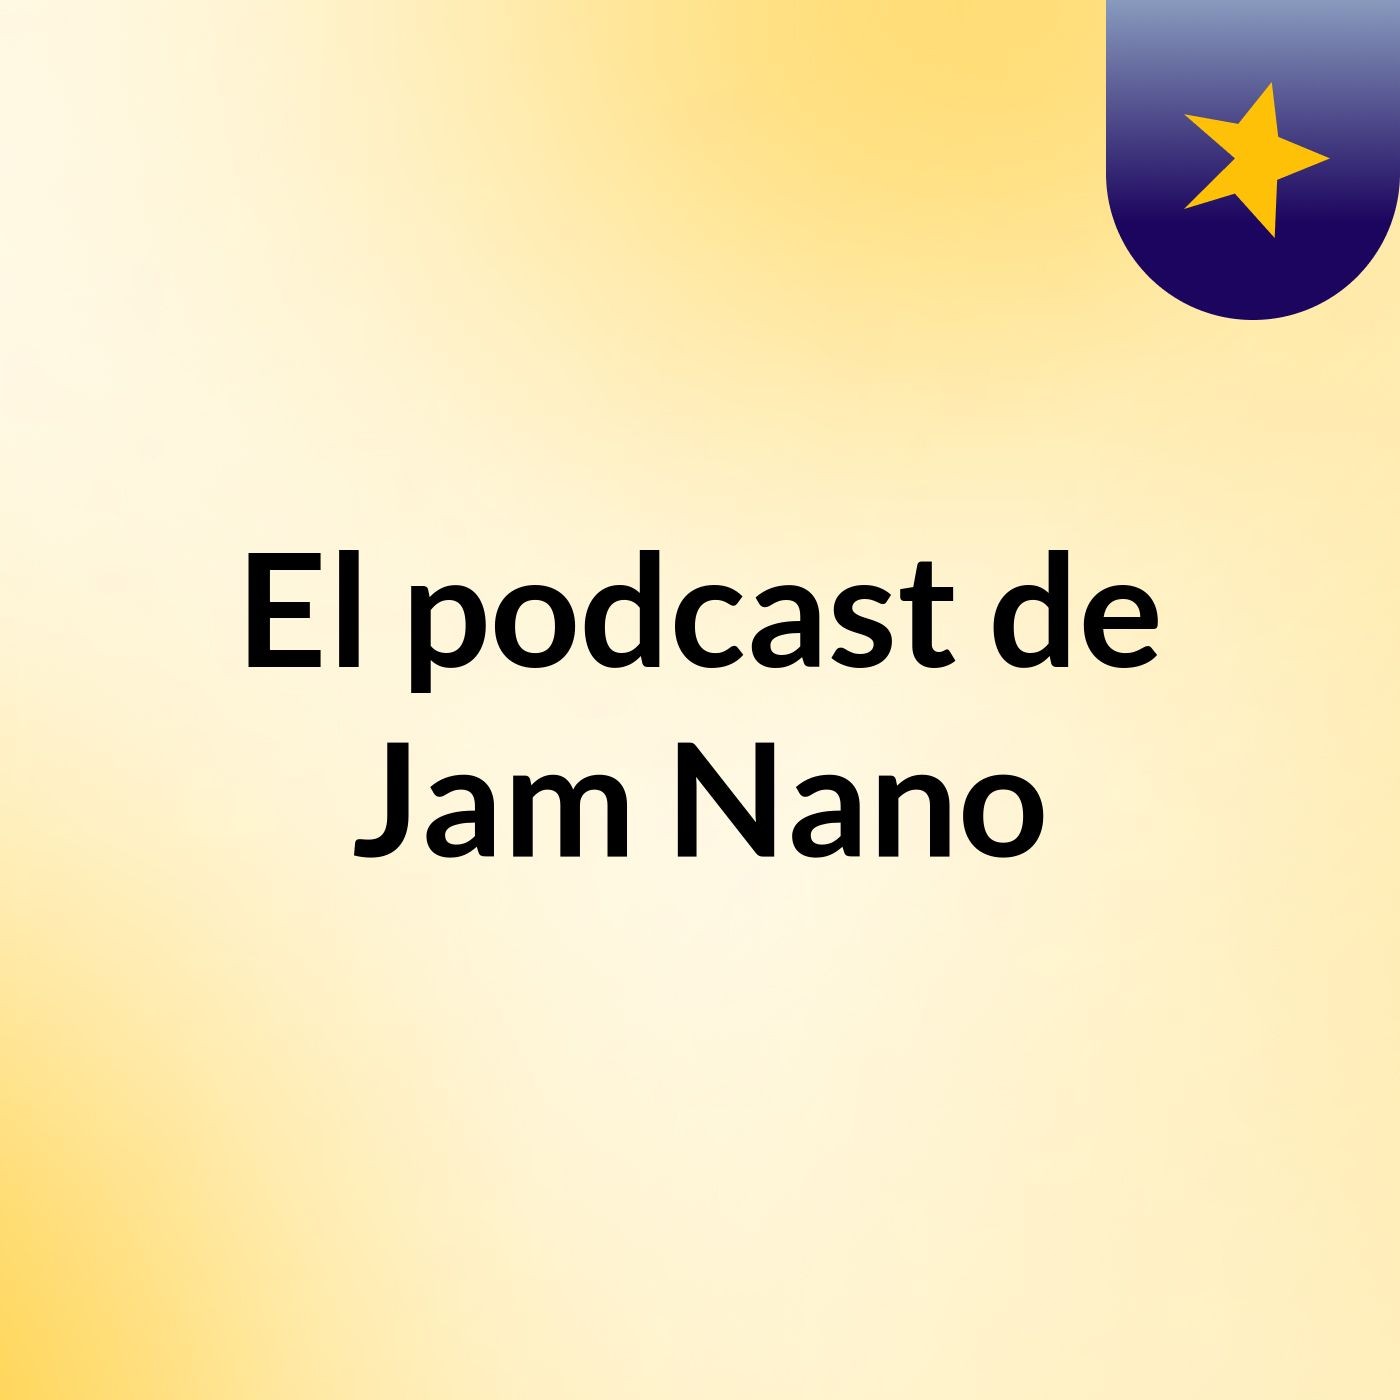 El podcast de Jam Nano